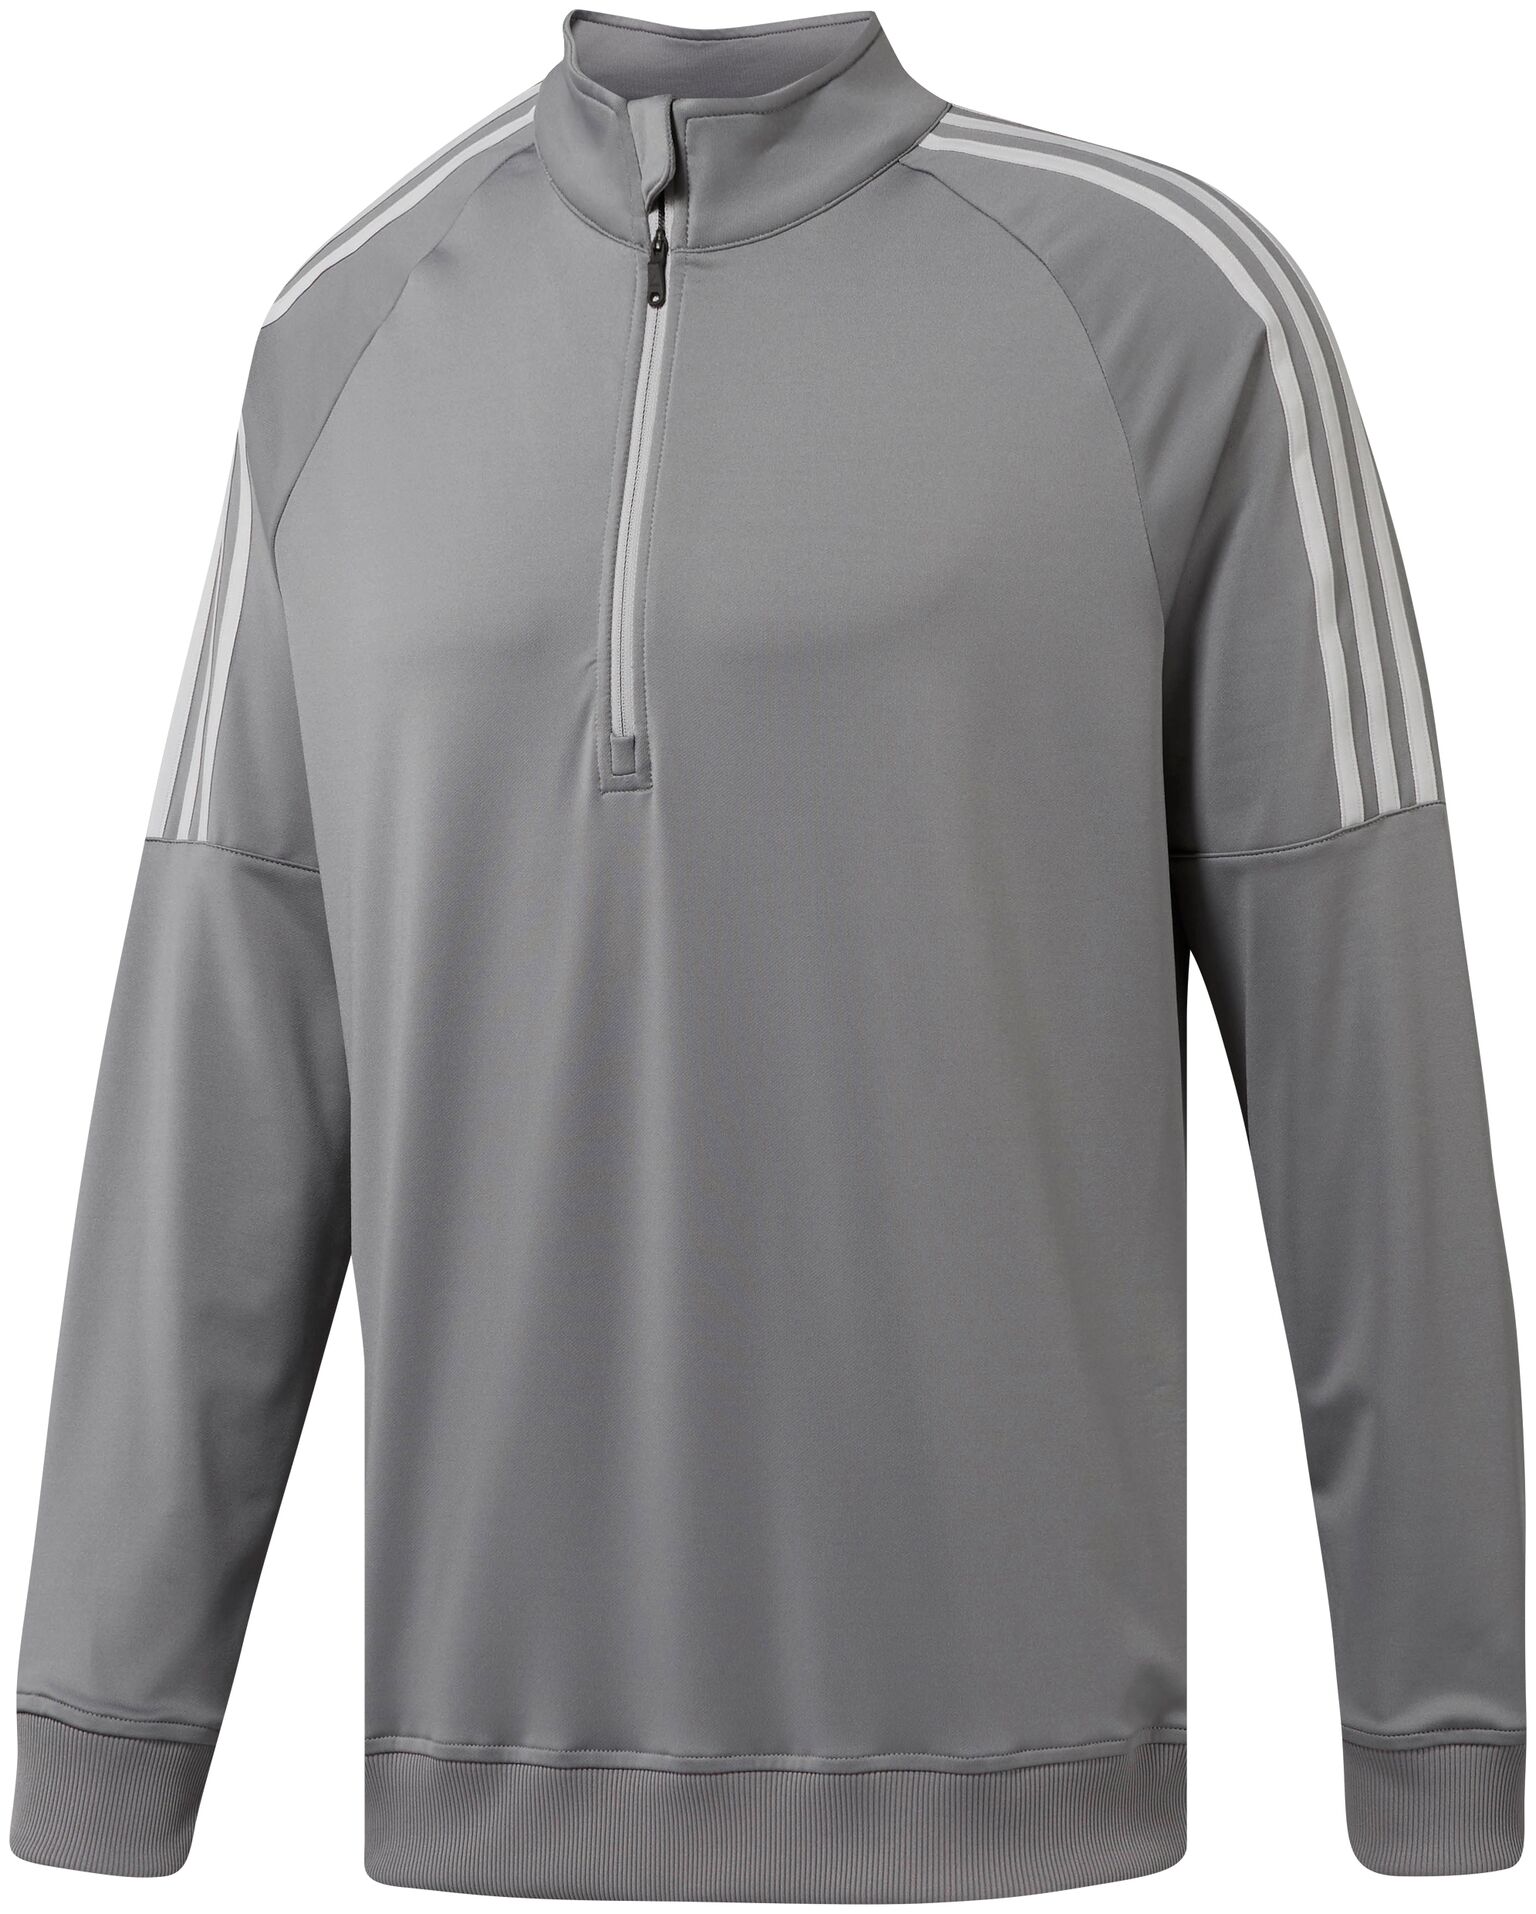 Adidas 3-stripe layering ¼ zip top - Grey